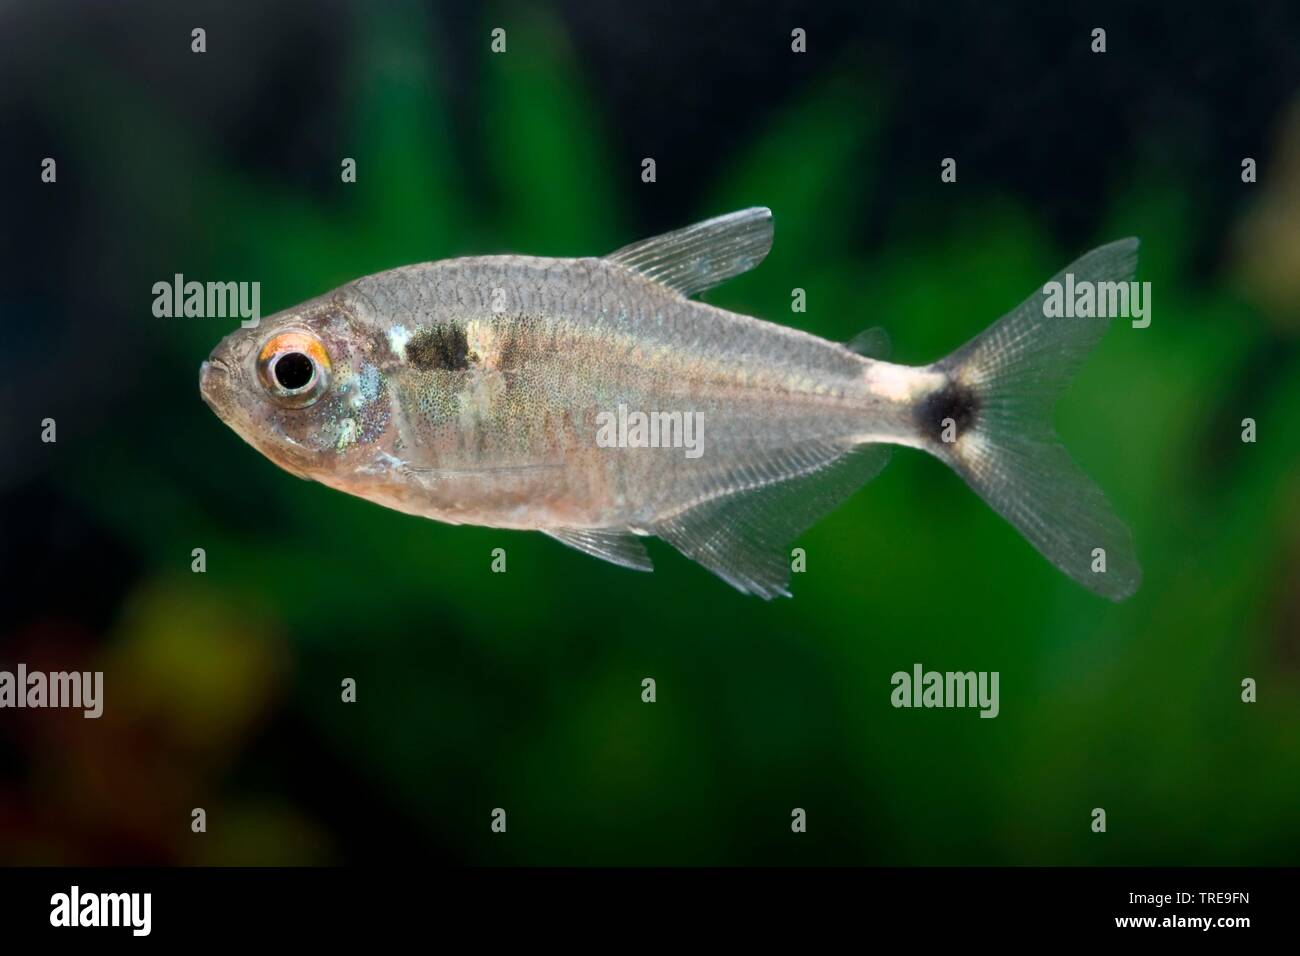 Beacon fish, Beacon tetra, Head-and-taillight tetra (Hemigrammus ocellifer), swimming, side view Stock Photo